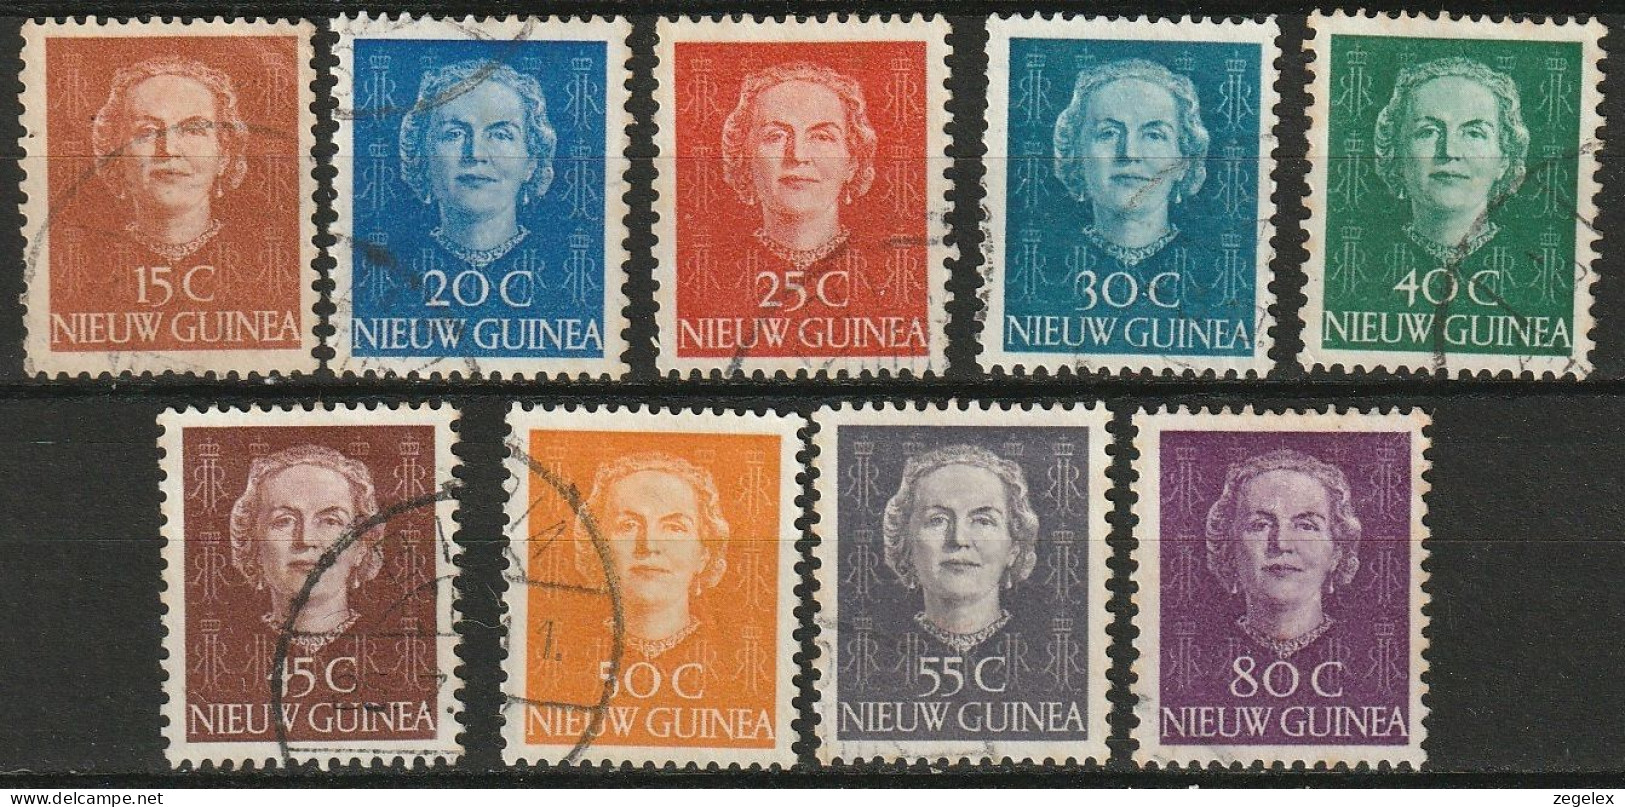 Nederlands Nieuw Guinea 1950, Koningin Juliana NVPH 10-18 Gestempeld/used - Nueva Guinea Holandesa